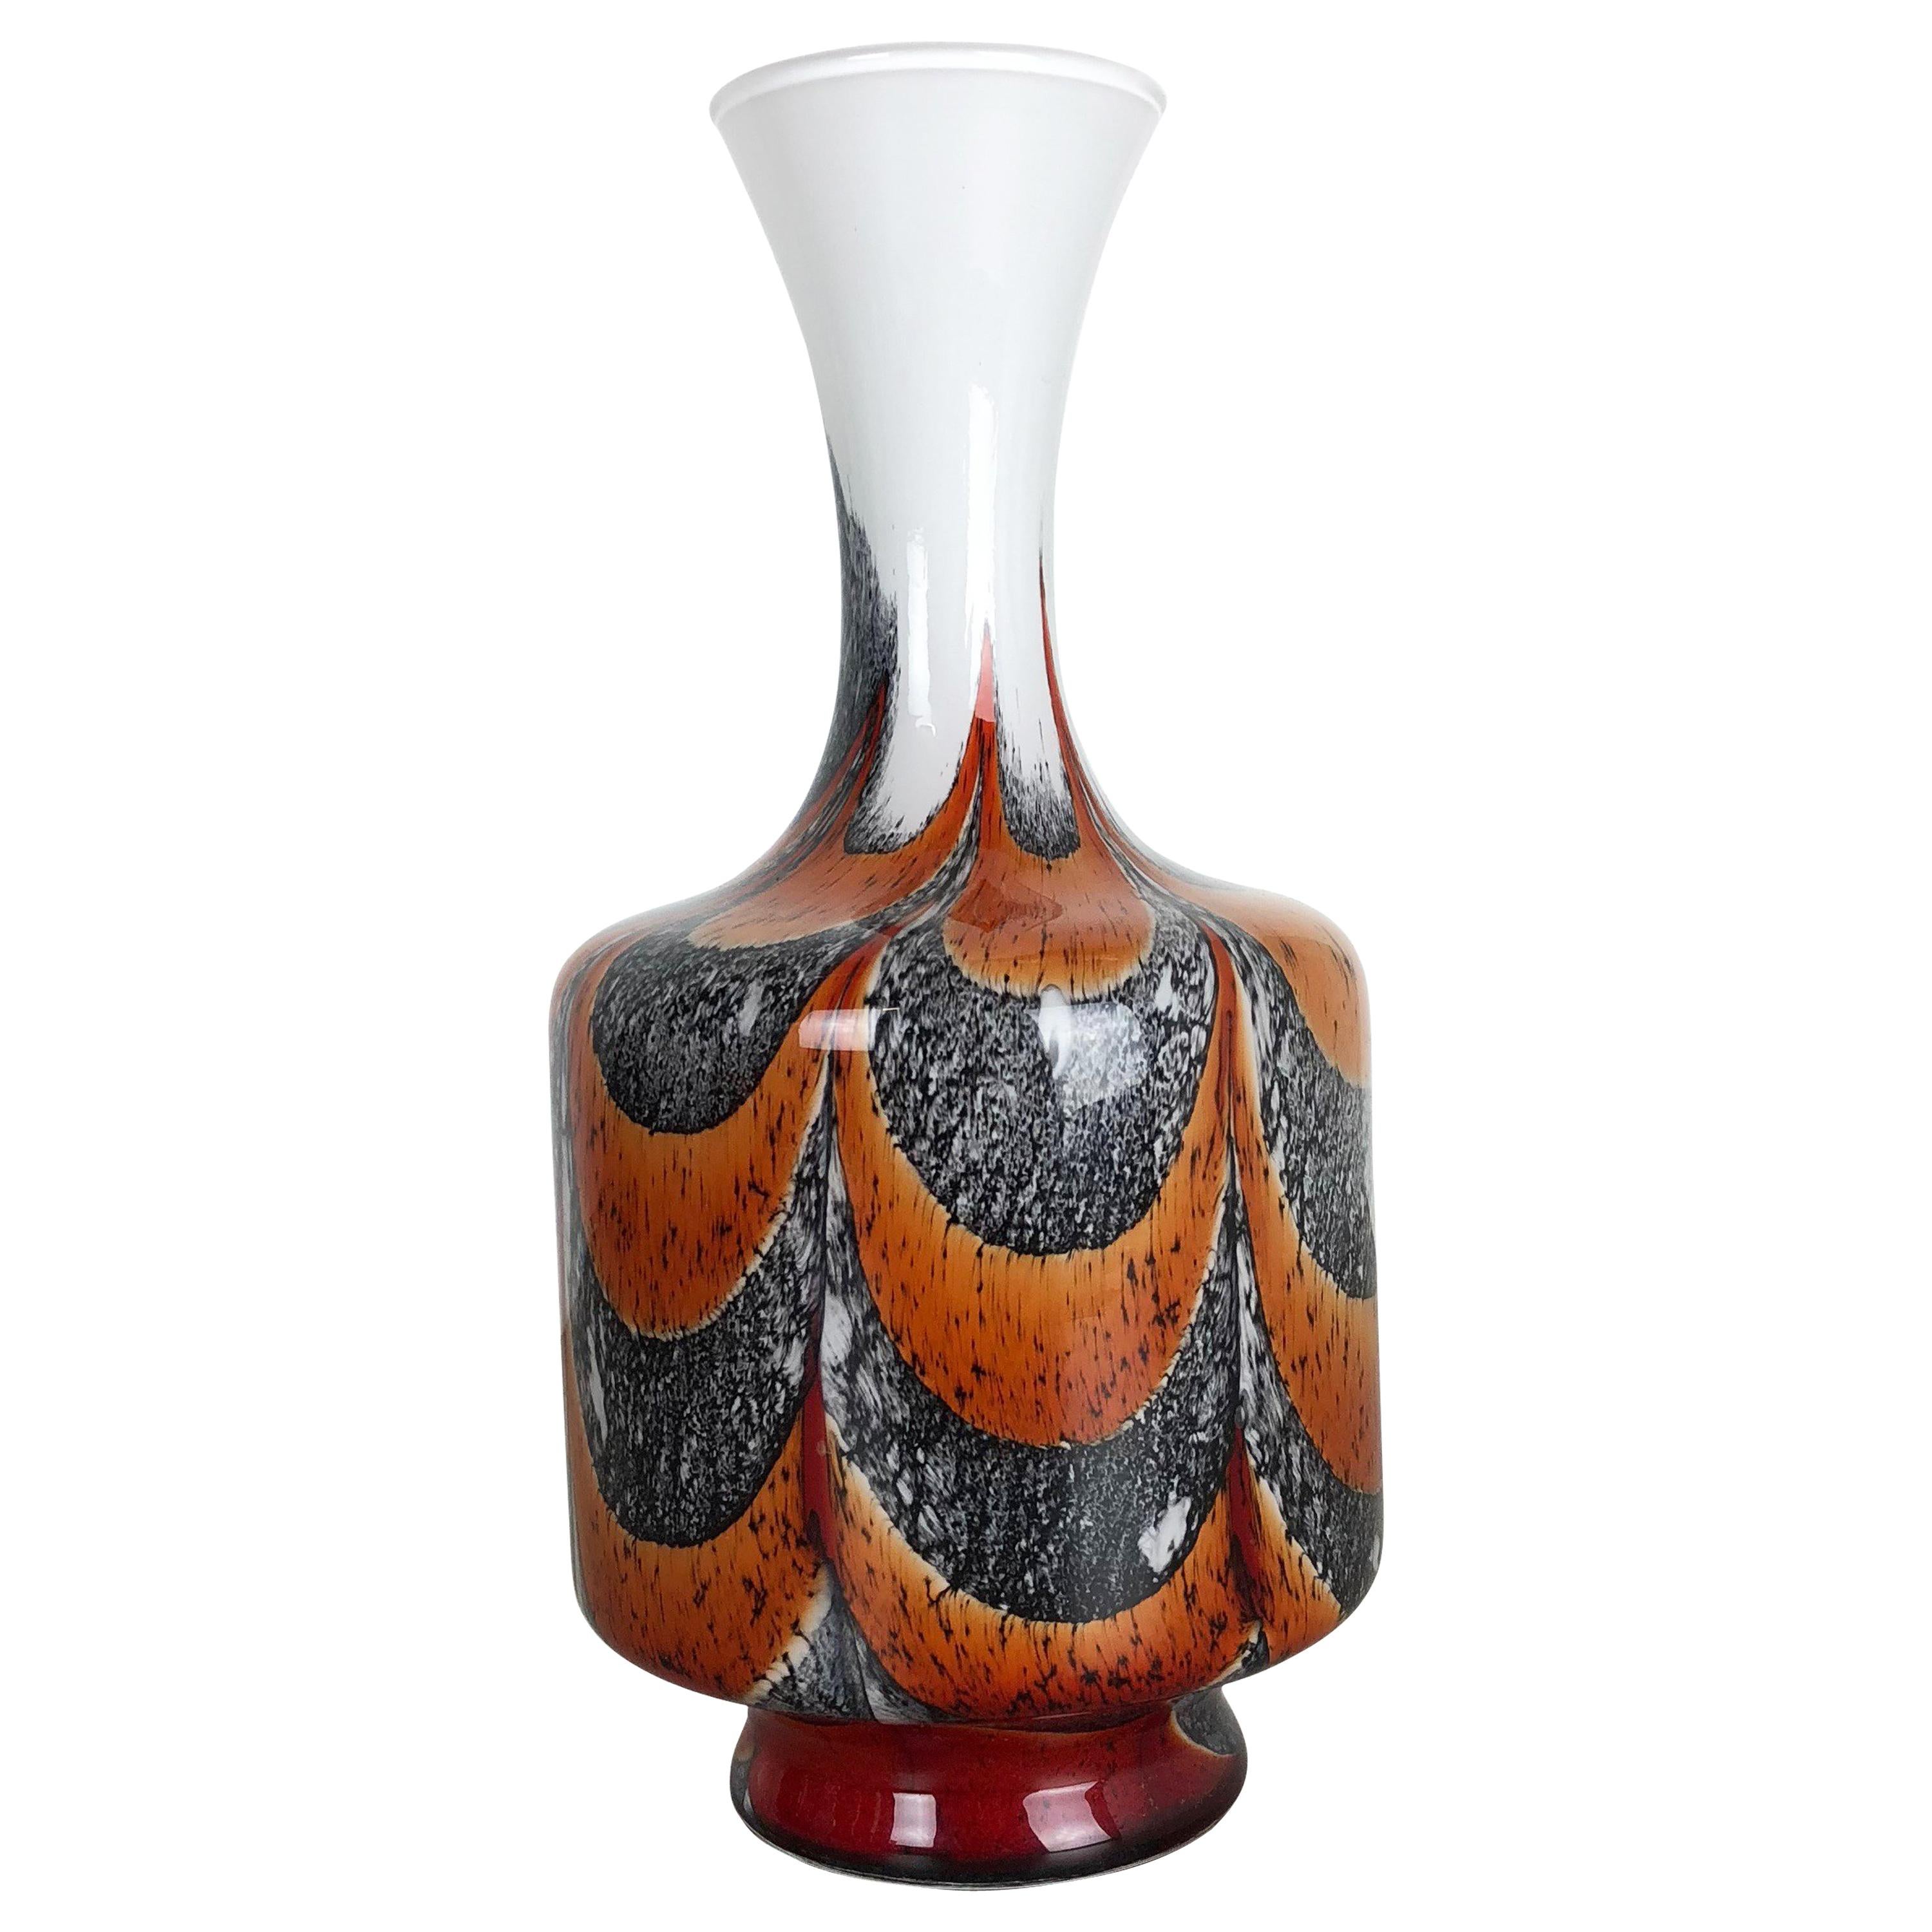 Extra Large Vintage Pop Art Opaline Florence Vase Design 1970s, Italy